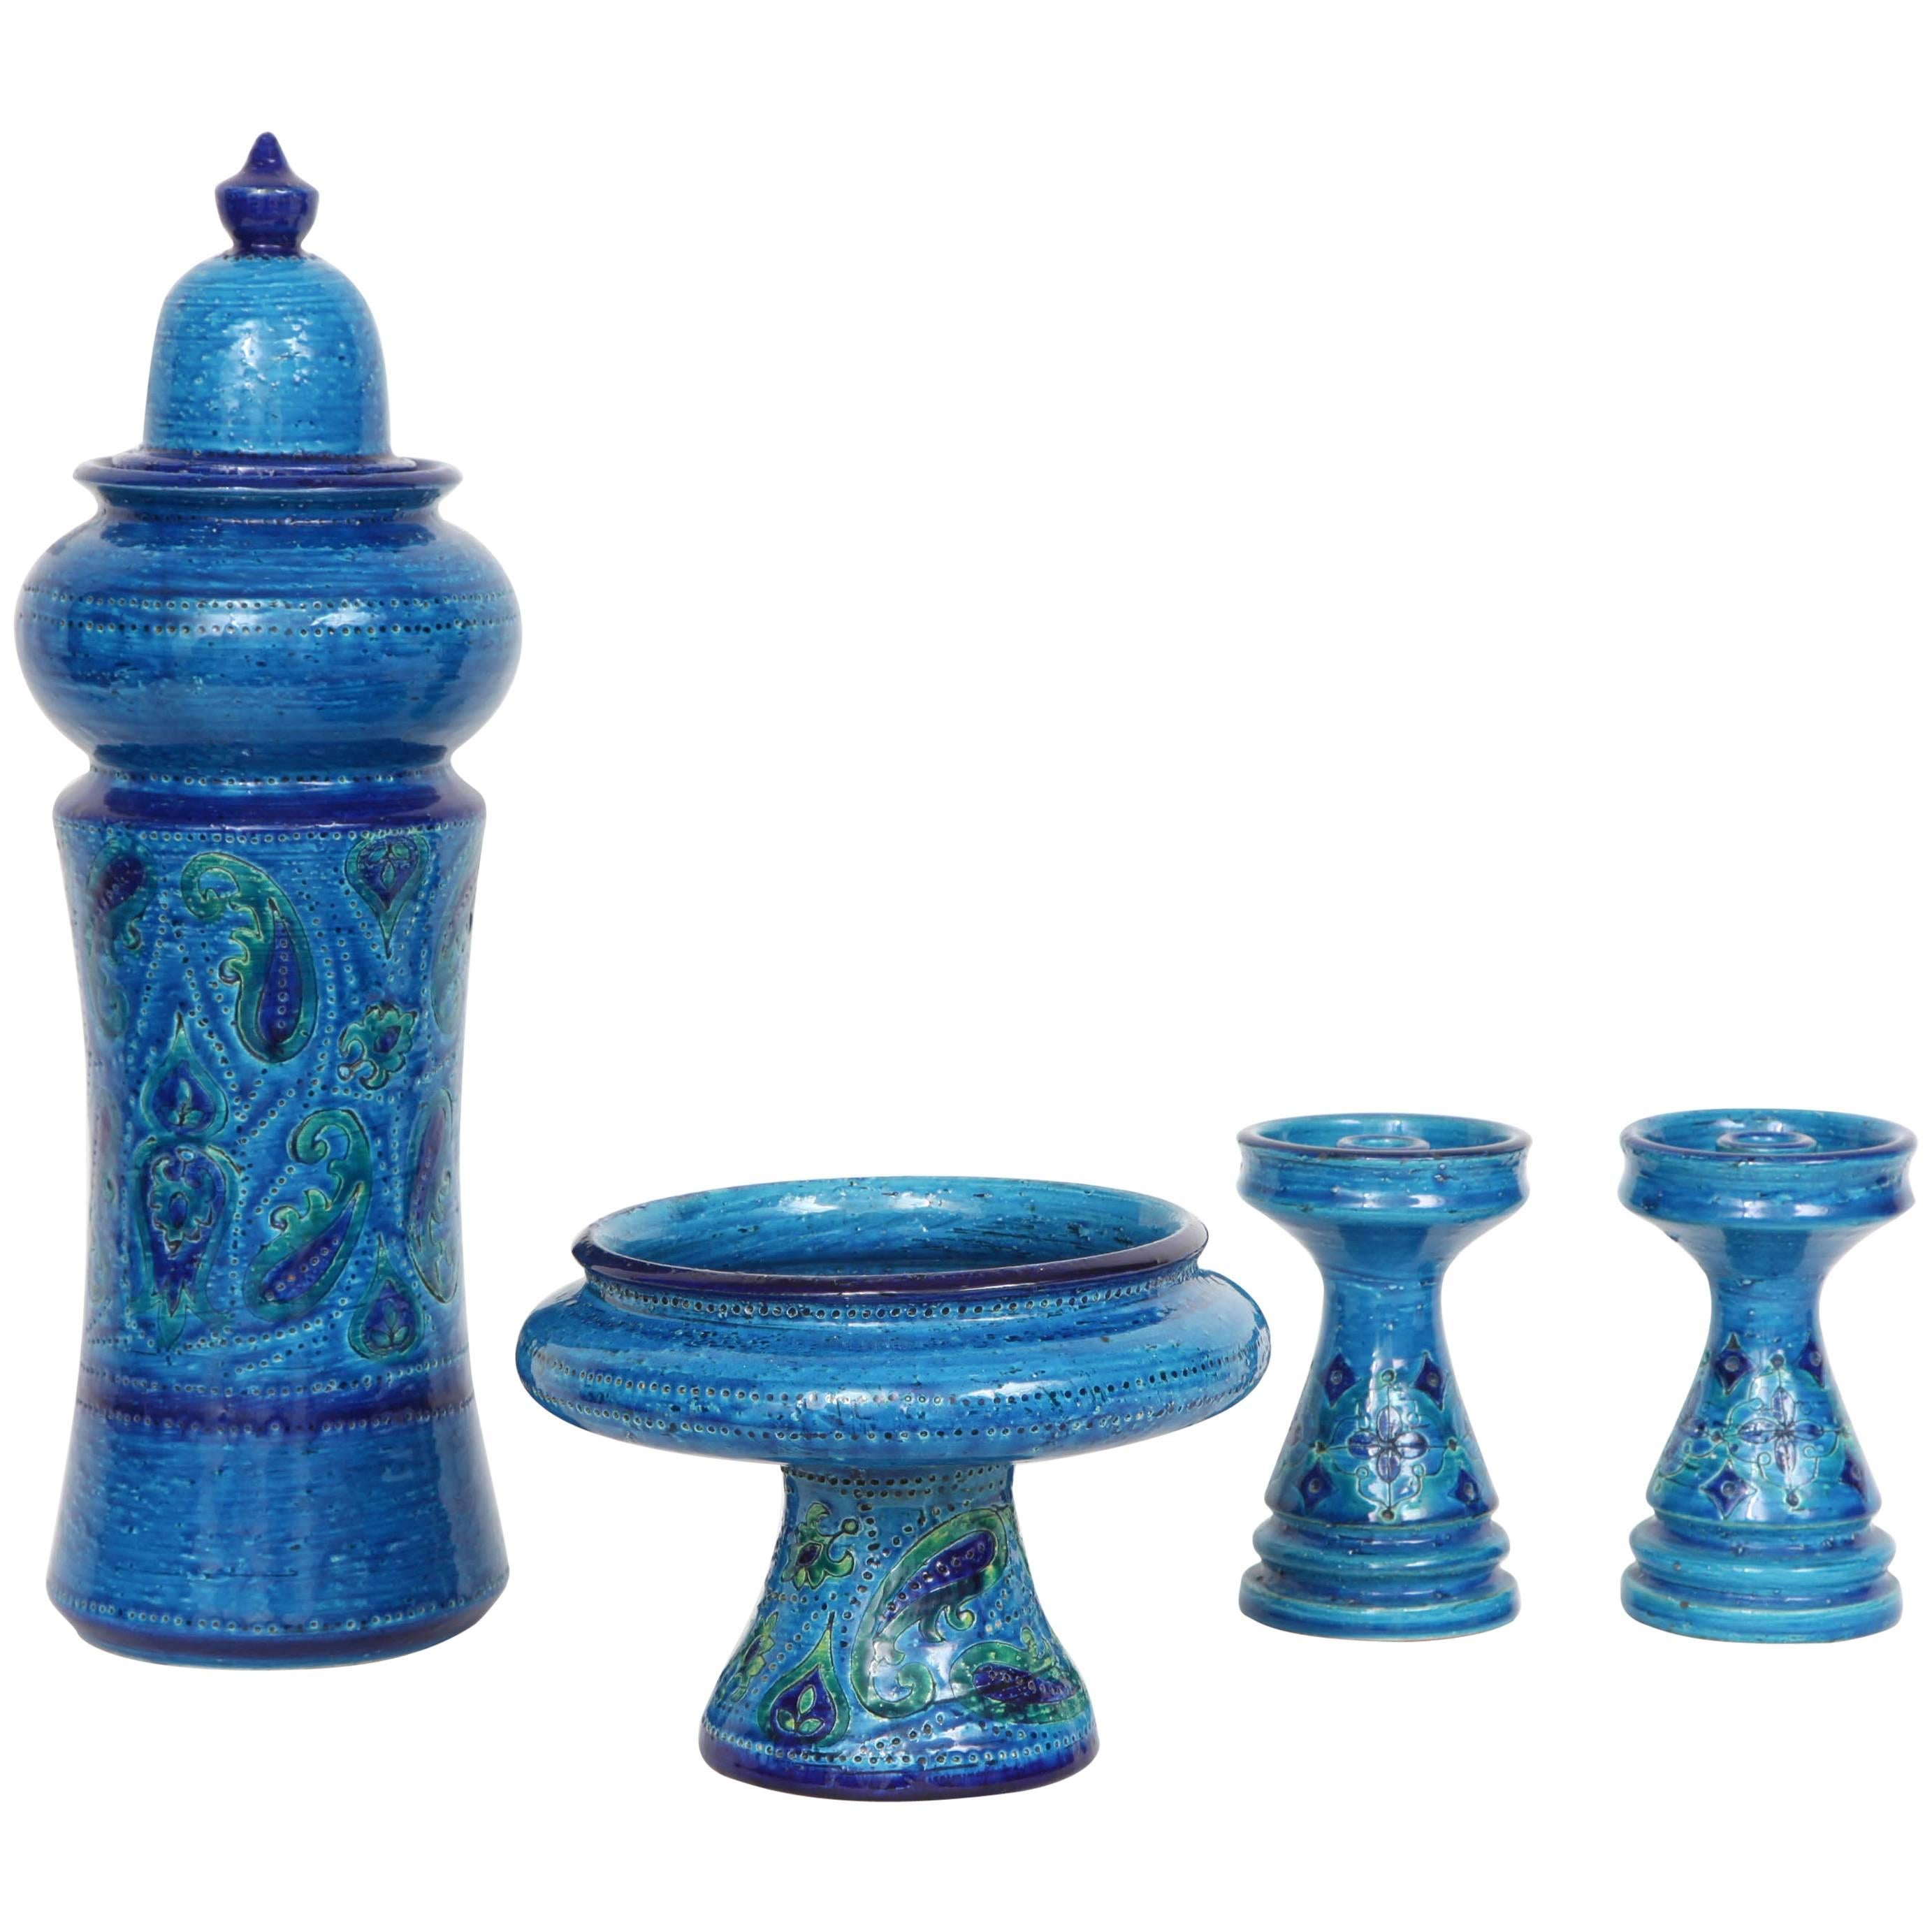 Four-Piece Rimini Blue Ceramic Set by Bitossi